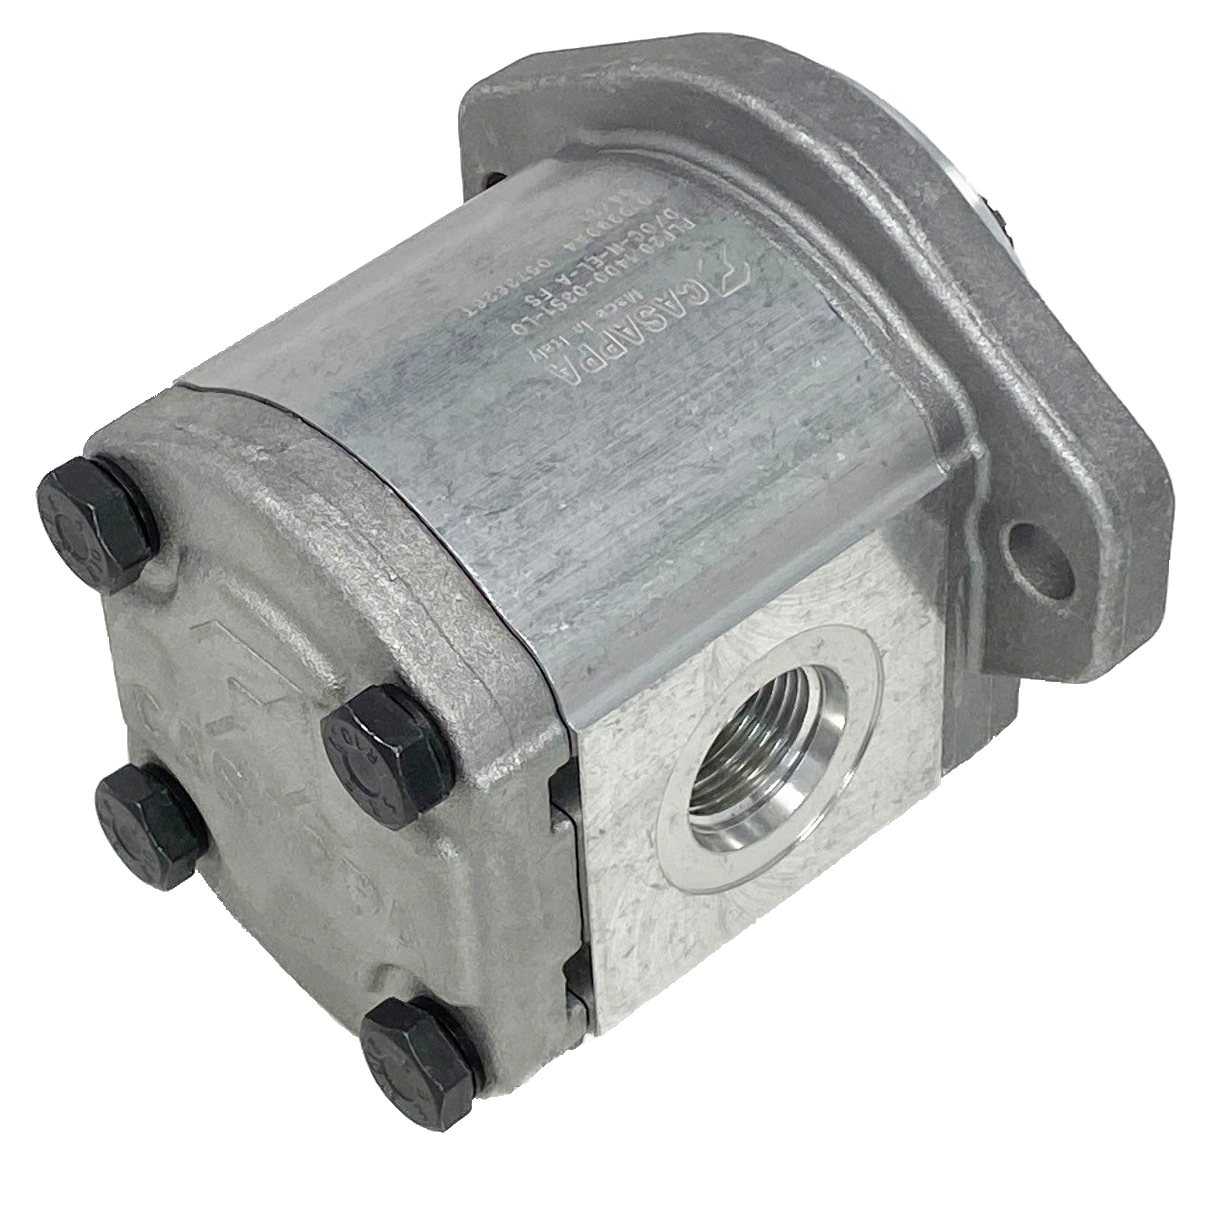 PLM20.16B0-07S1-LOC/OD-N-EL : Casappa Polaris Gear Motor, 16.85cc, 3625psi Rated, 3000RPM, Reversible Interior Drain, 11T 16/32dp Shaft, SAE A 2-Bolt Flange, 0.625 (5/8") #10 SAE Inlet, 0.75 (3/4") #12 SAE Outlet, Aluminum Body & Flange